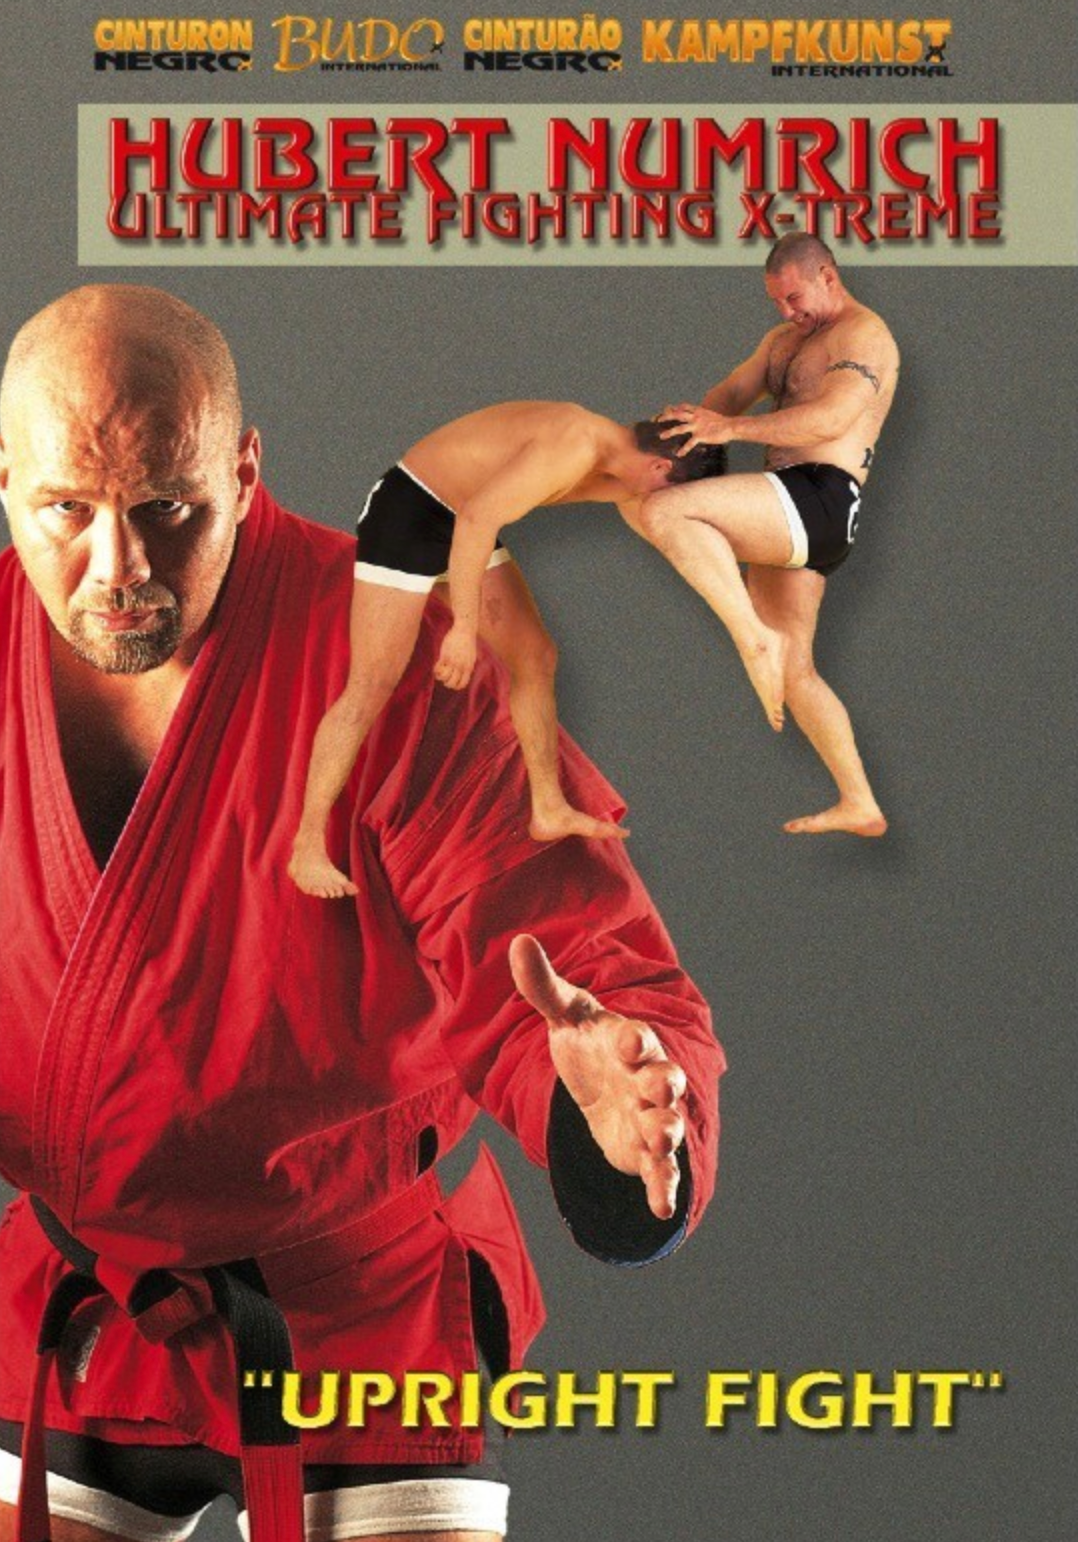 Ultimate Fighting X-Treme DVD 2 Upright Fight by Hubert Numrich - Budovideos Inc